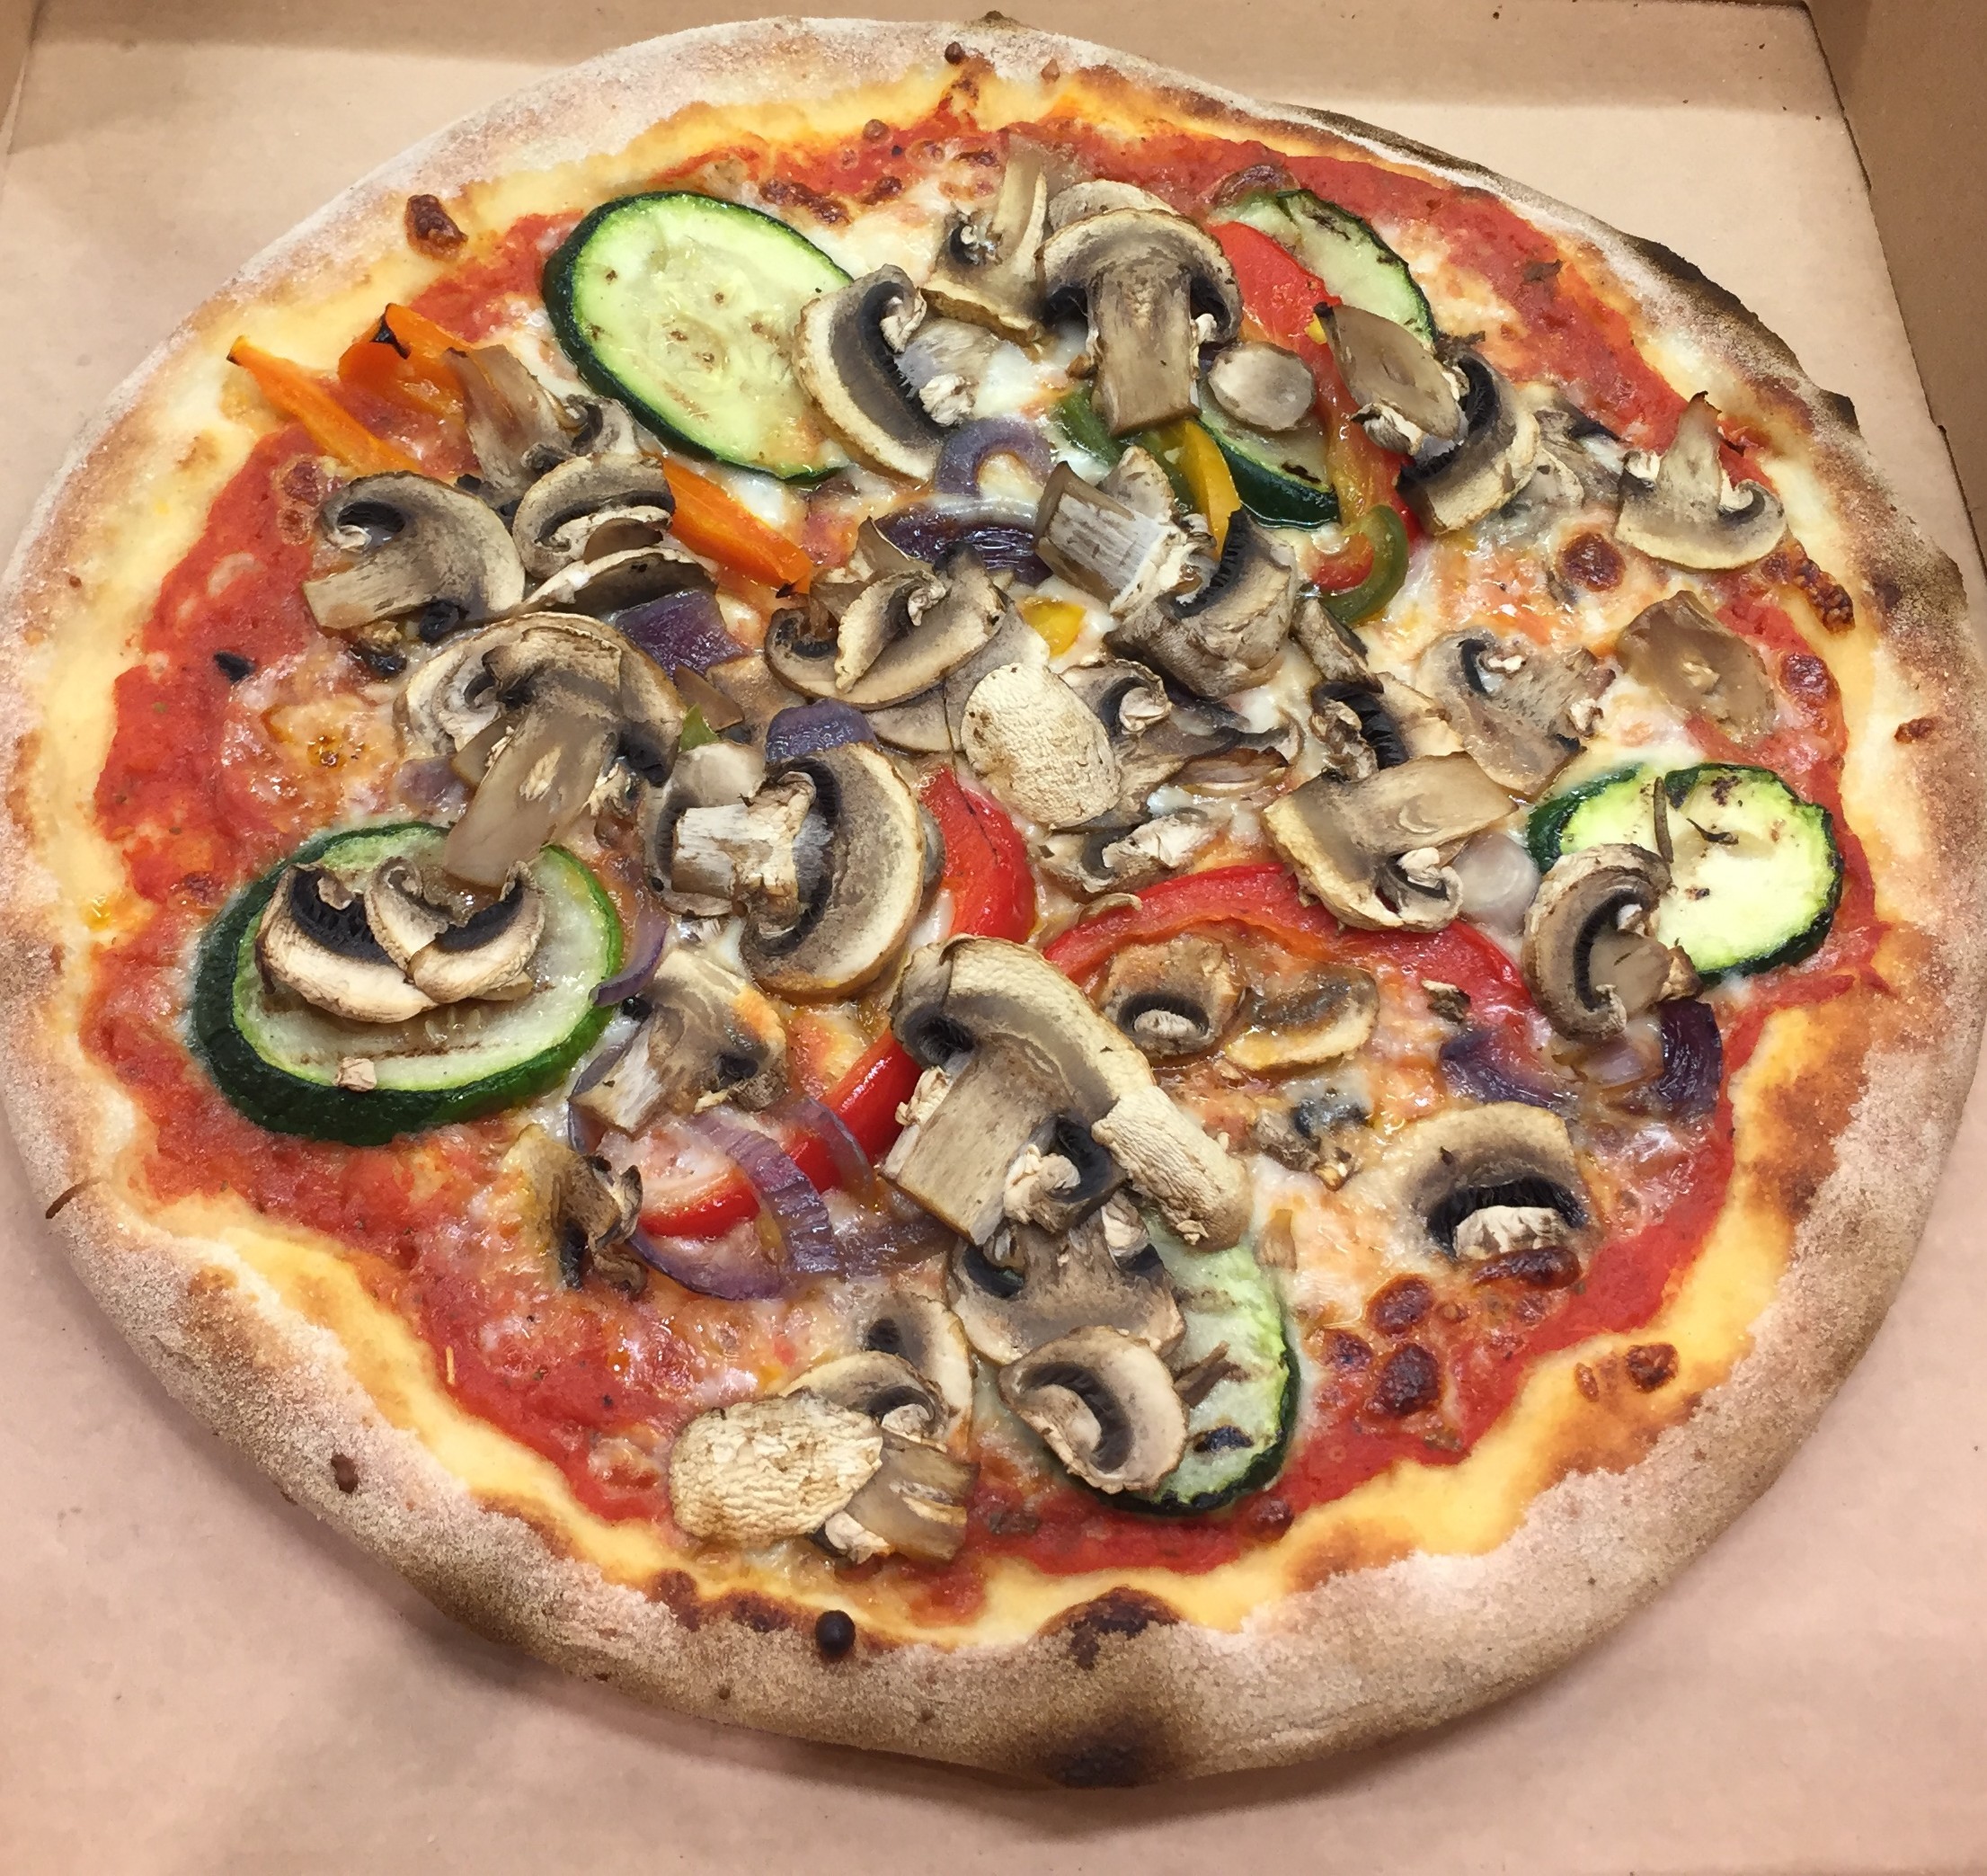 Pizza vegetariana for £8.50